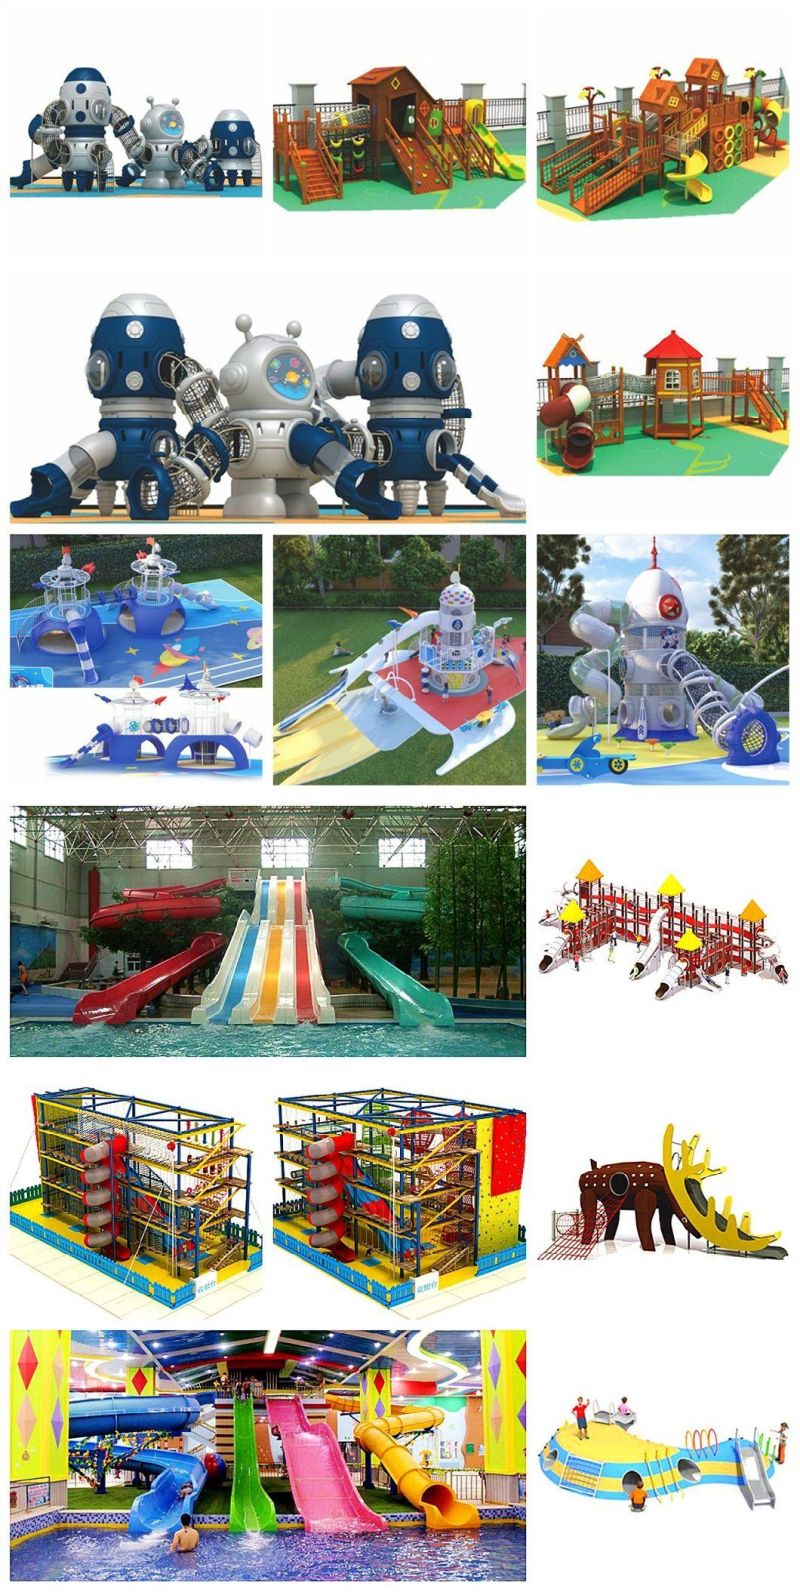 Amusement Park Children′s Community Outdoor Playground Slide Park Climbing Equipment